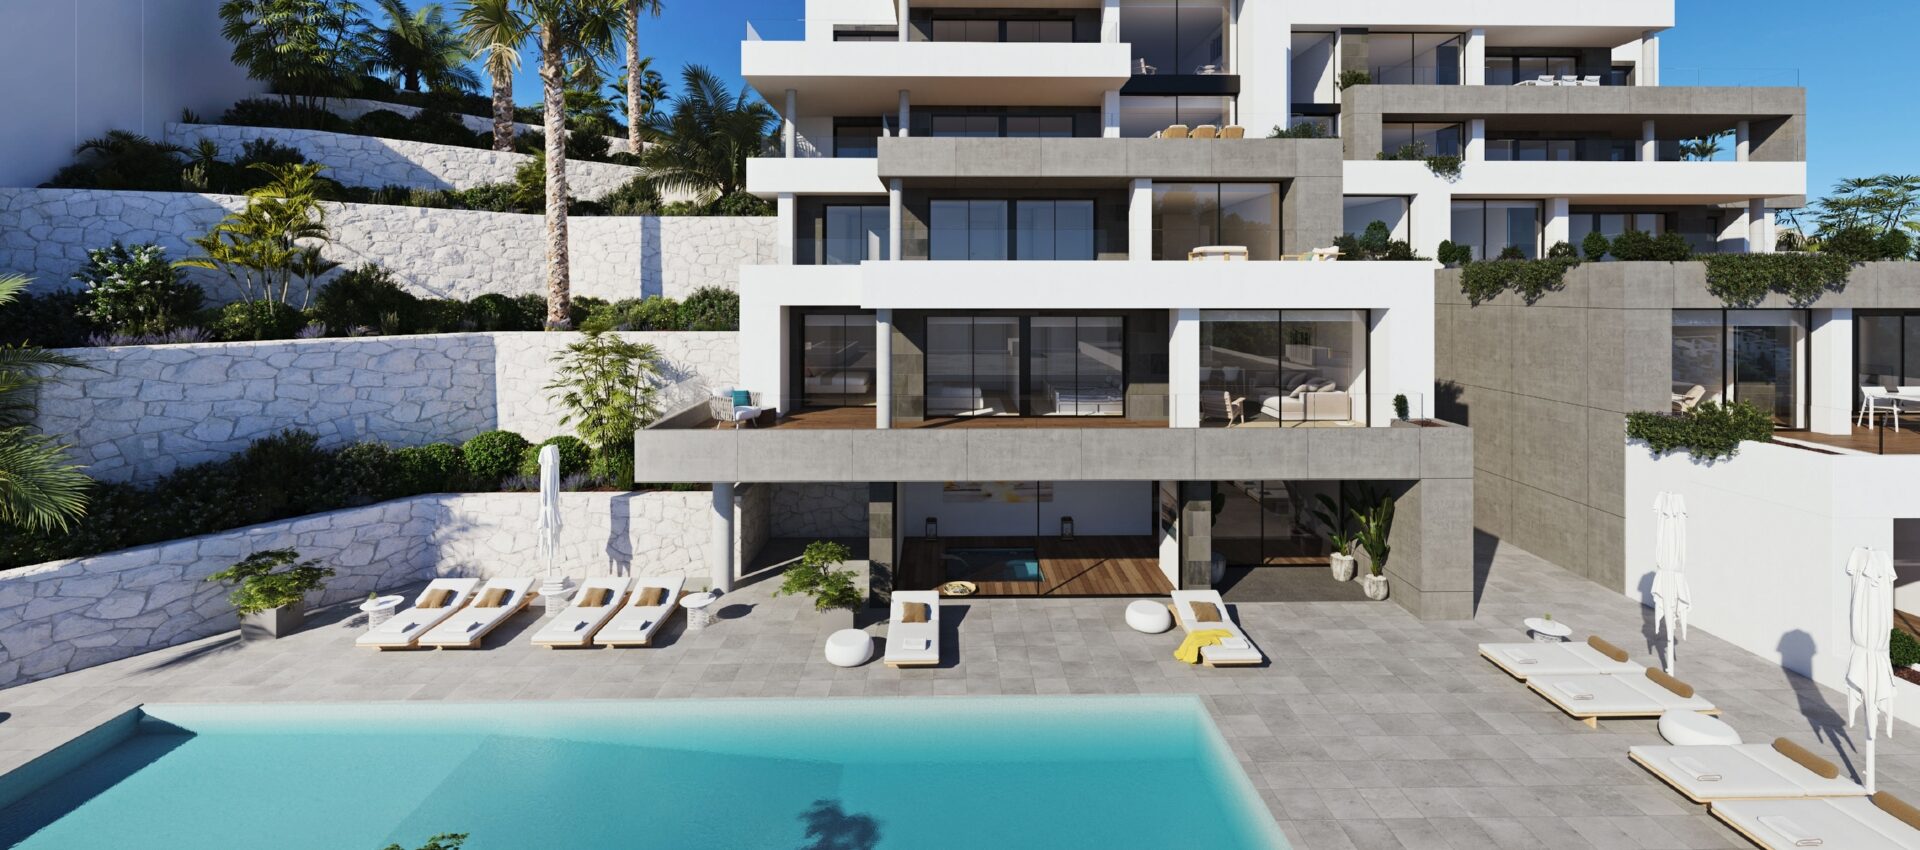 Brand New Luxury Apartments on The Golf Development of La Sella Near Denia